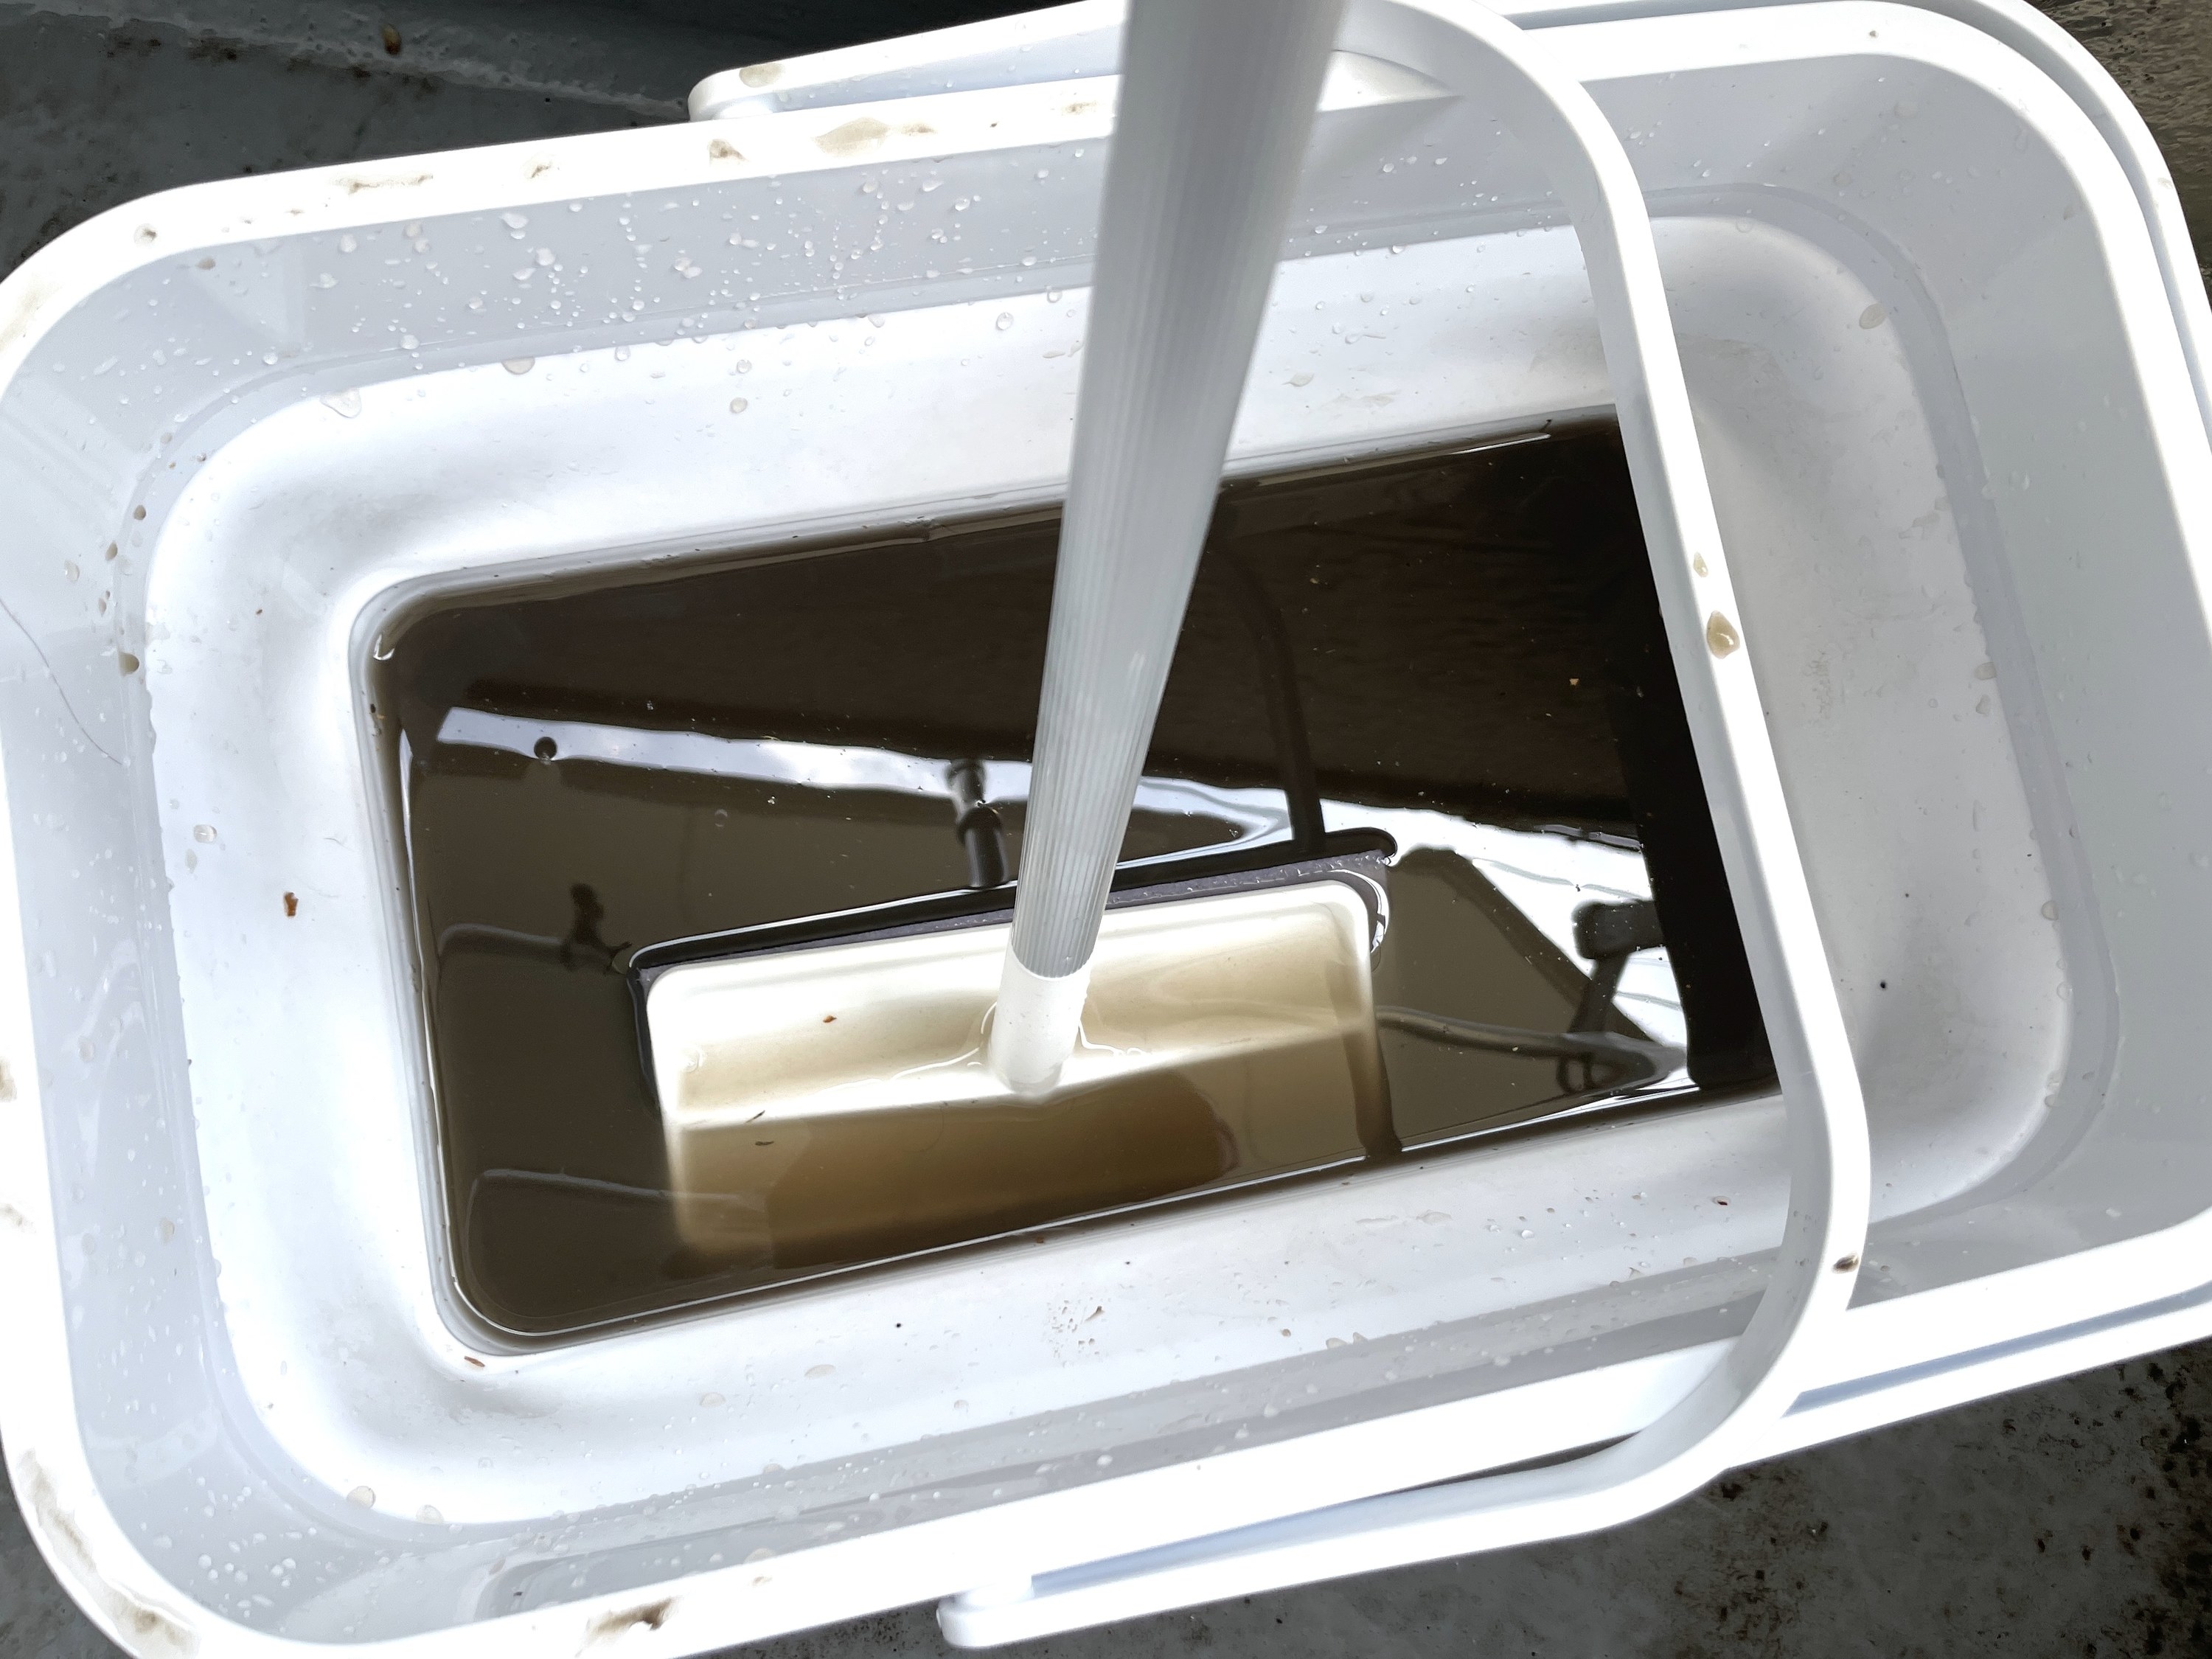 CAINZ（カインズ）のオススメの掃除用具「玄関タイルの汚れを落とすブラッシングスポンジ伸縮柄 全長(約)75～117cm」